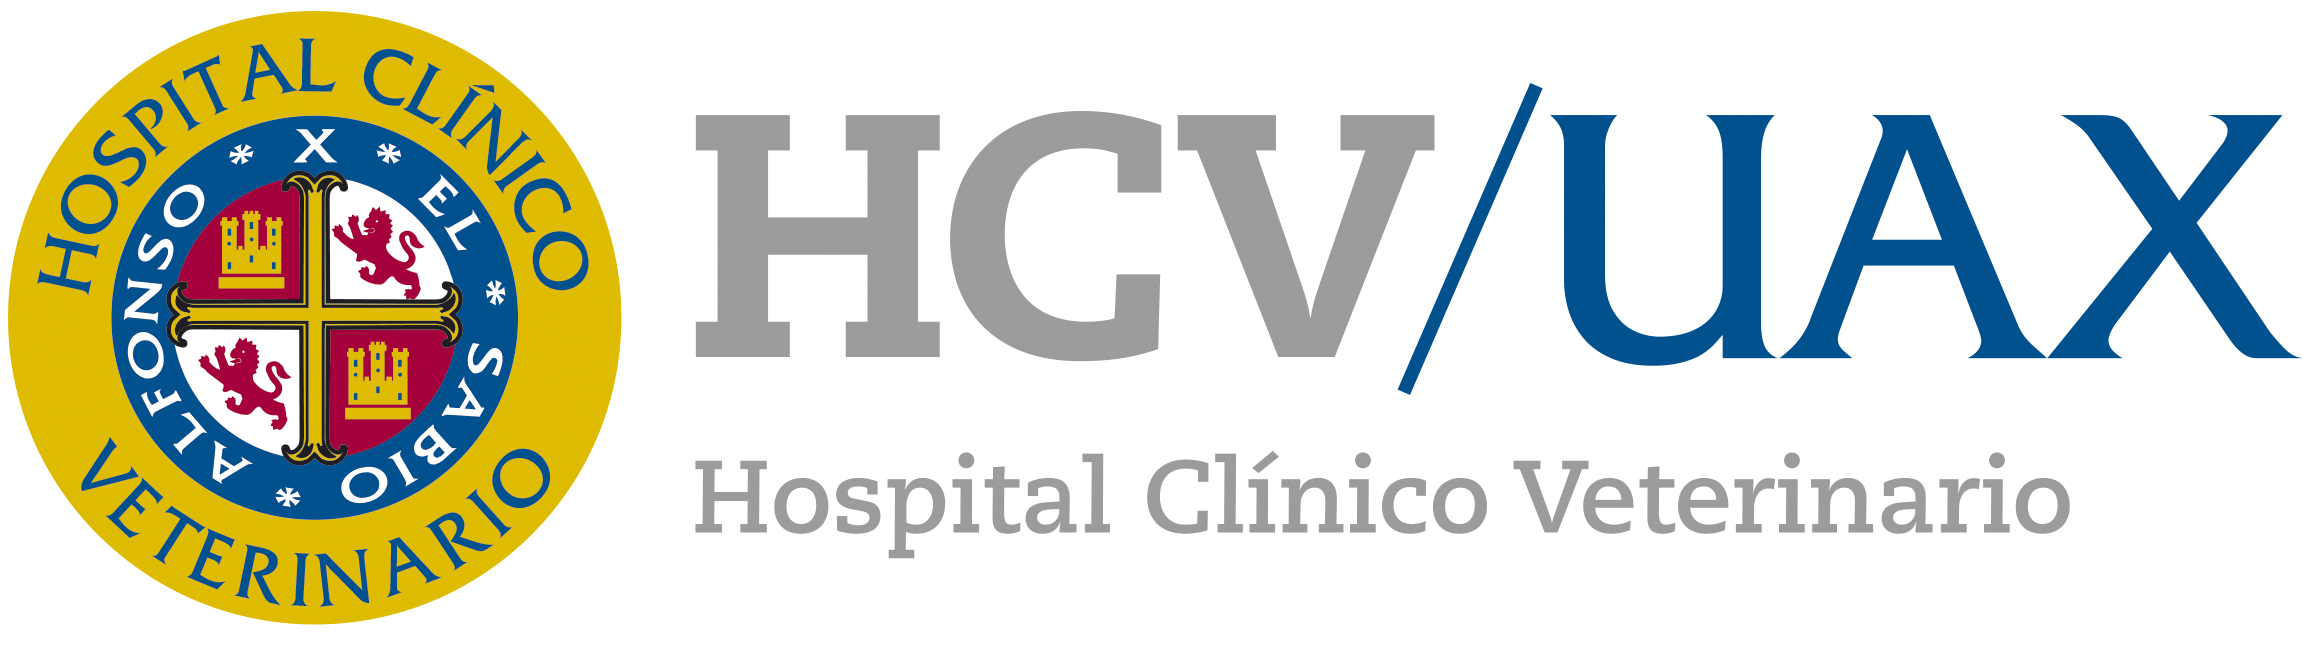 Logo HCV ok copy